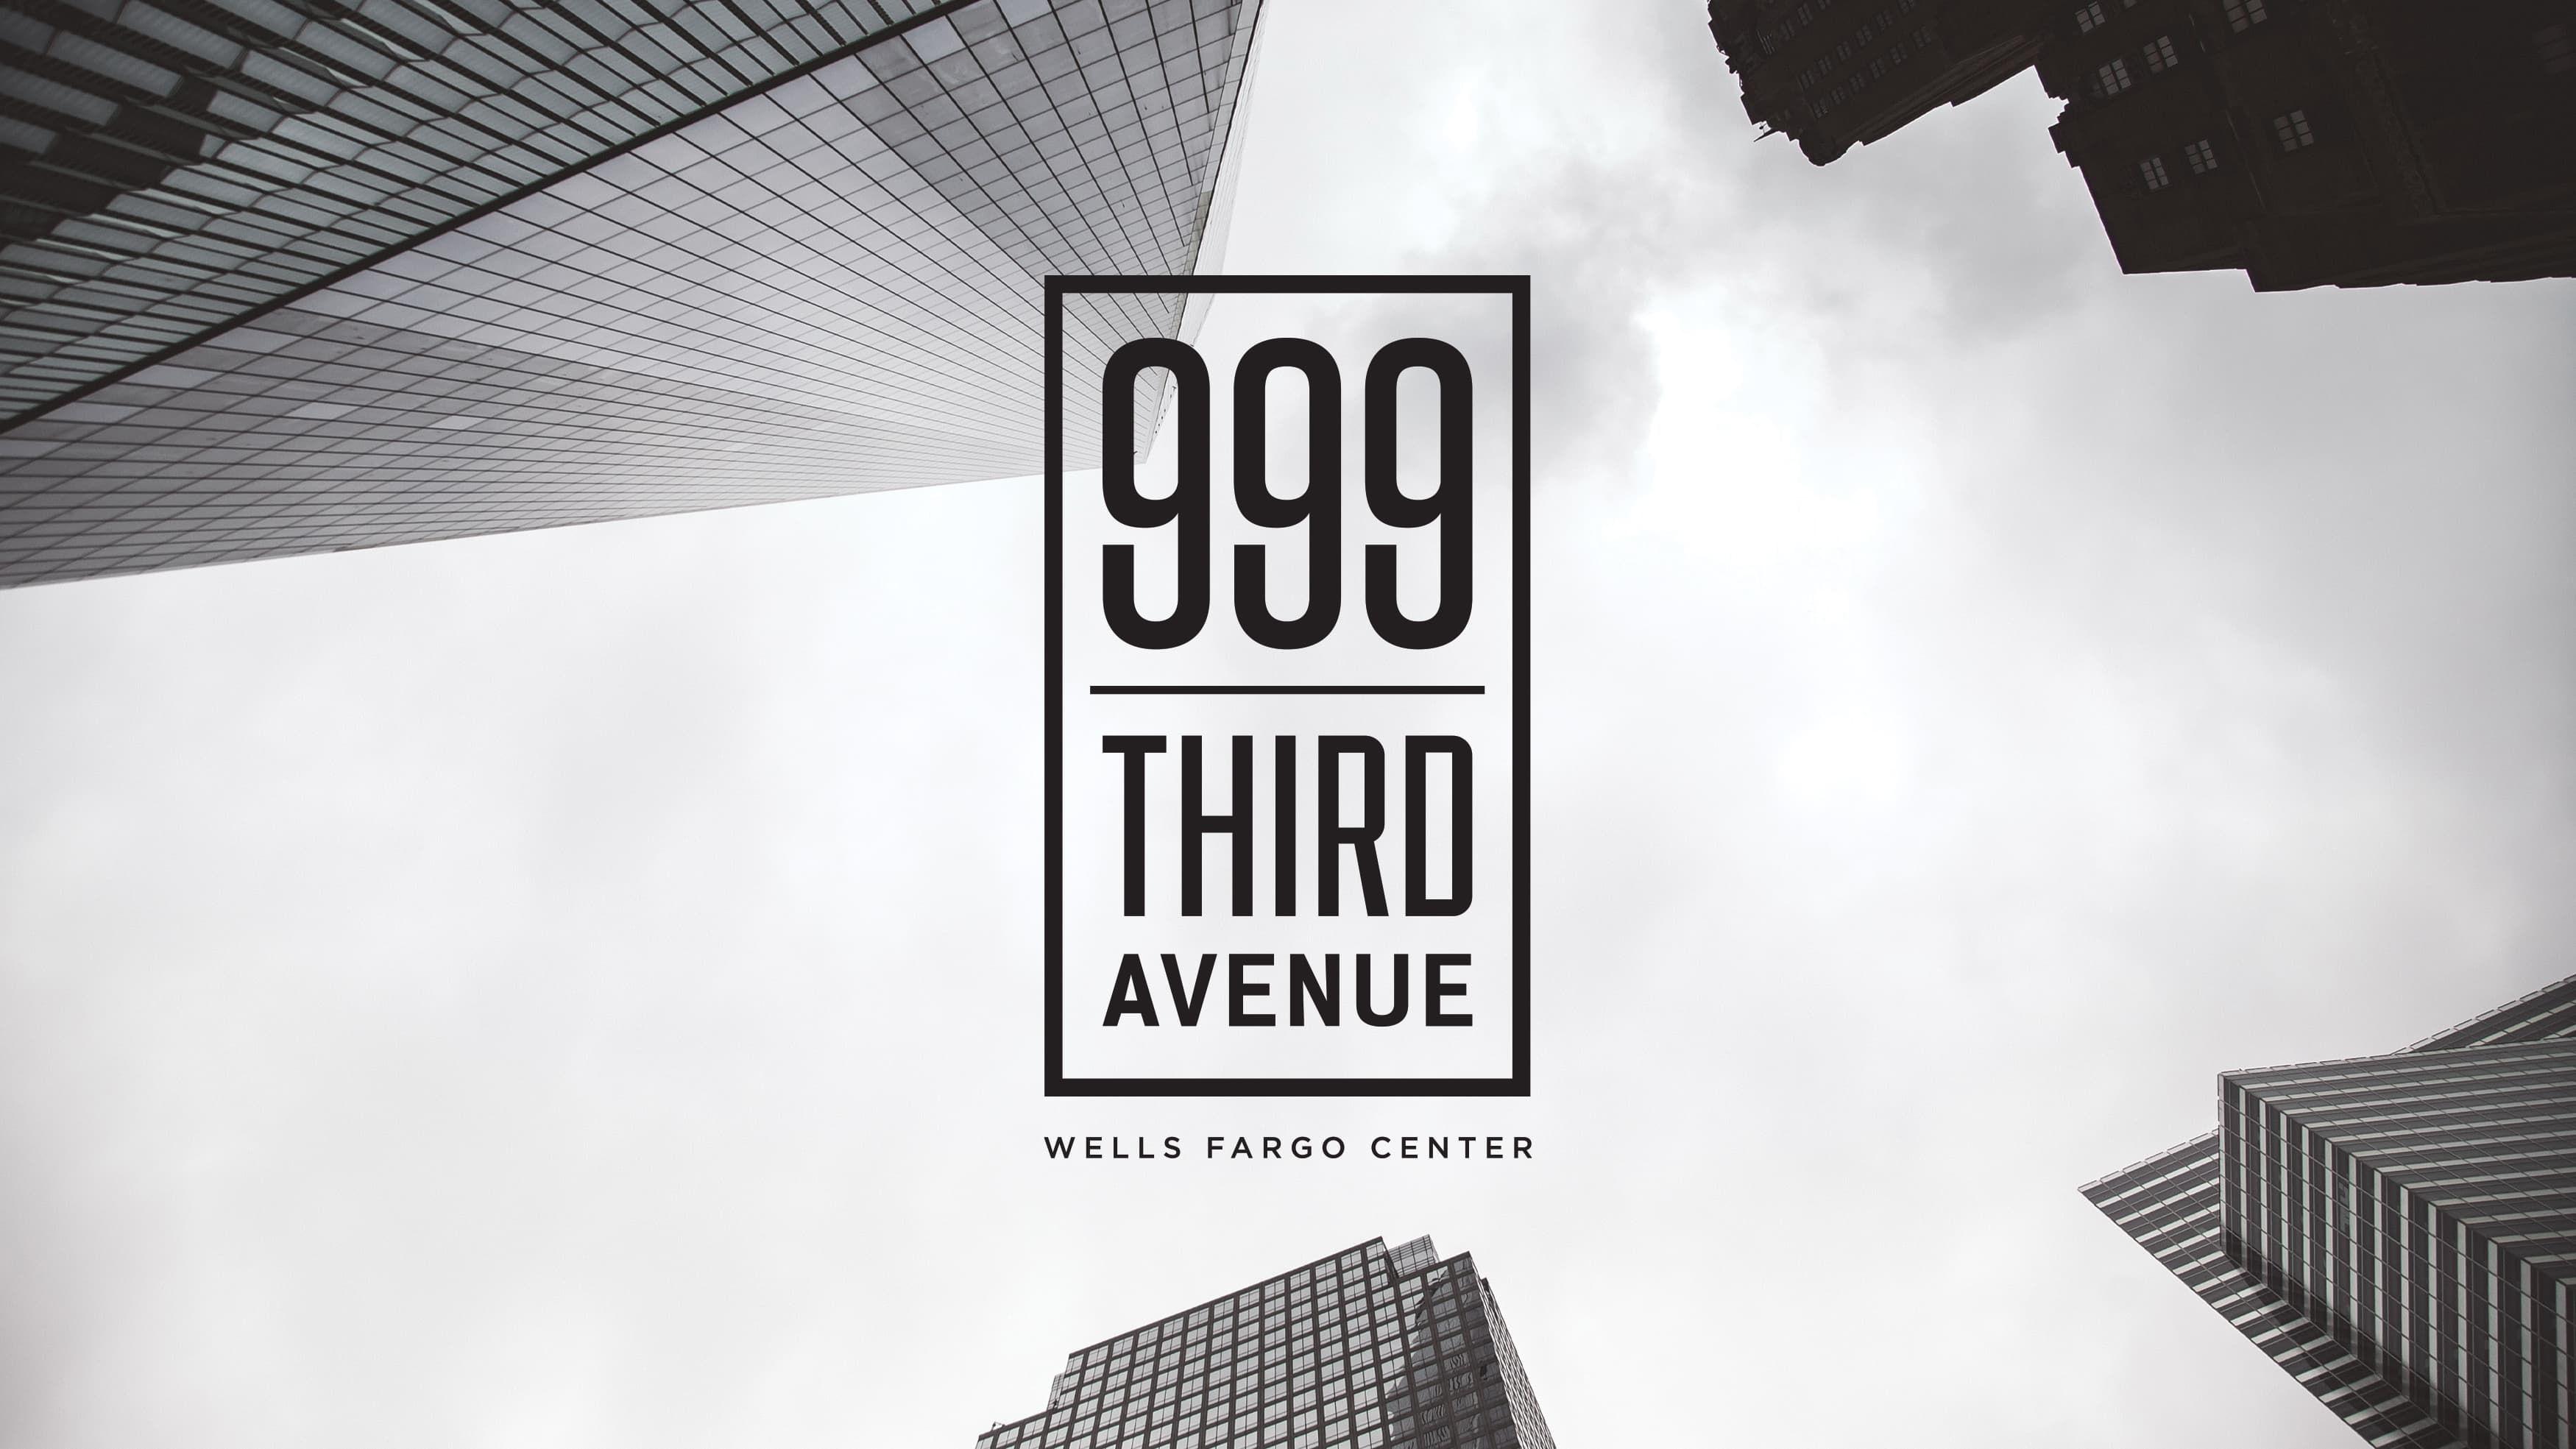 999 Third Avenue Wells Fargo Center logo designed by RSM Design